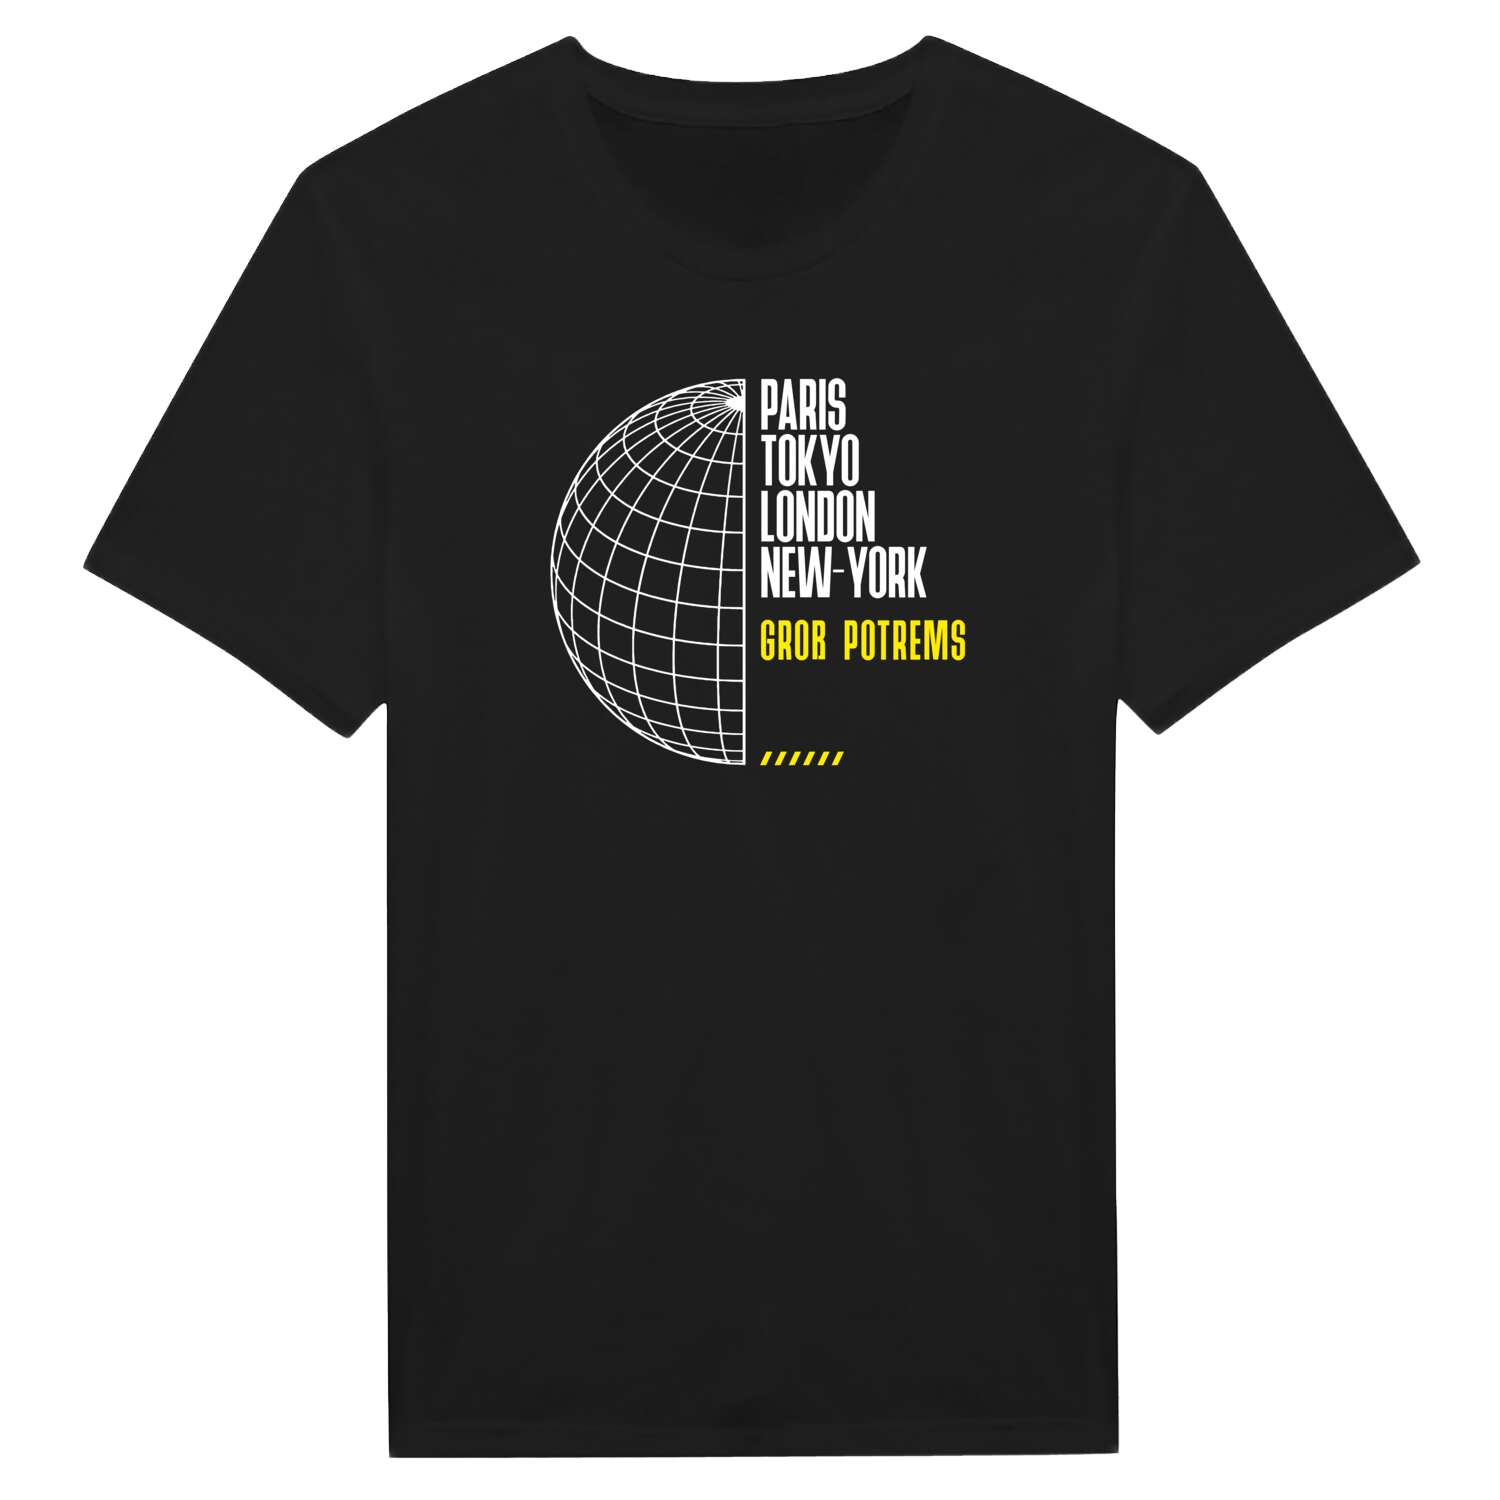 Groß Potrems T-Shirt »Paris Tokyo London«